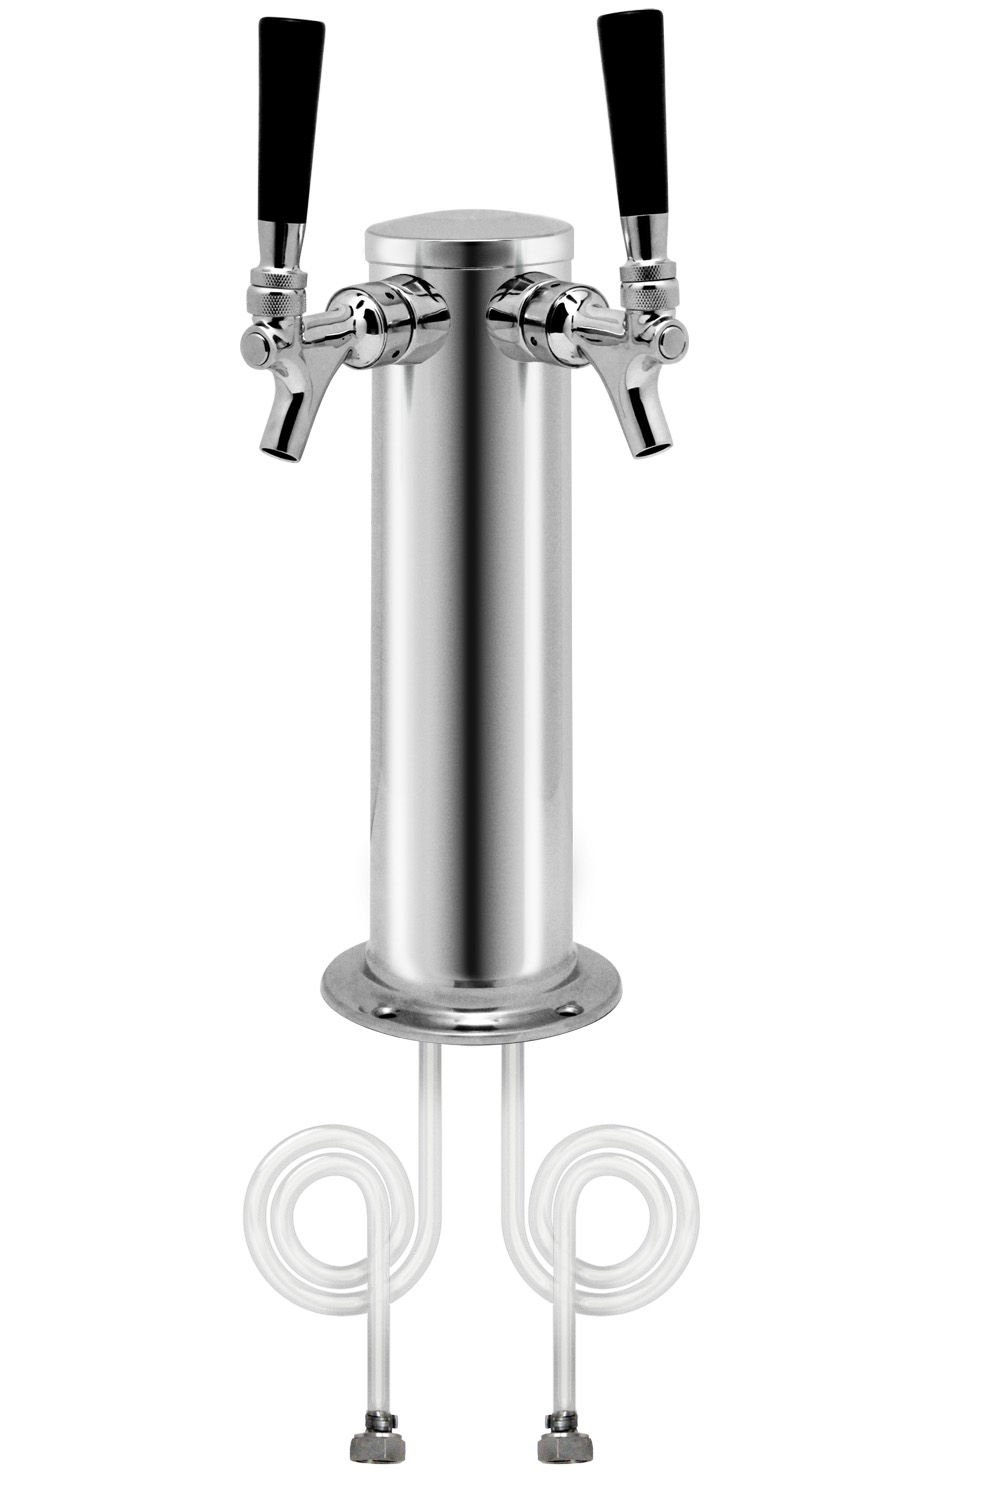 Single Tap Draft Beer Kegerator Tower Home Bar Faucet 100% Stainless Steel 